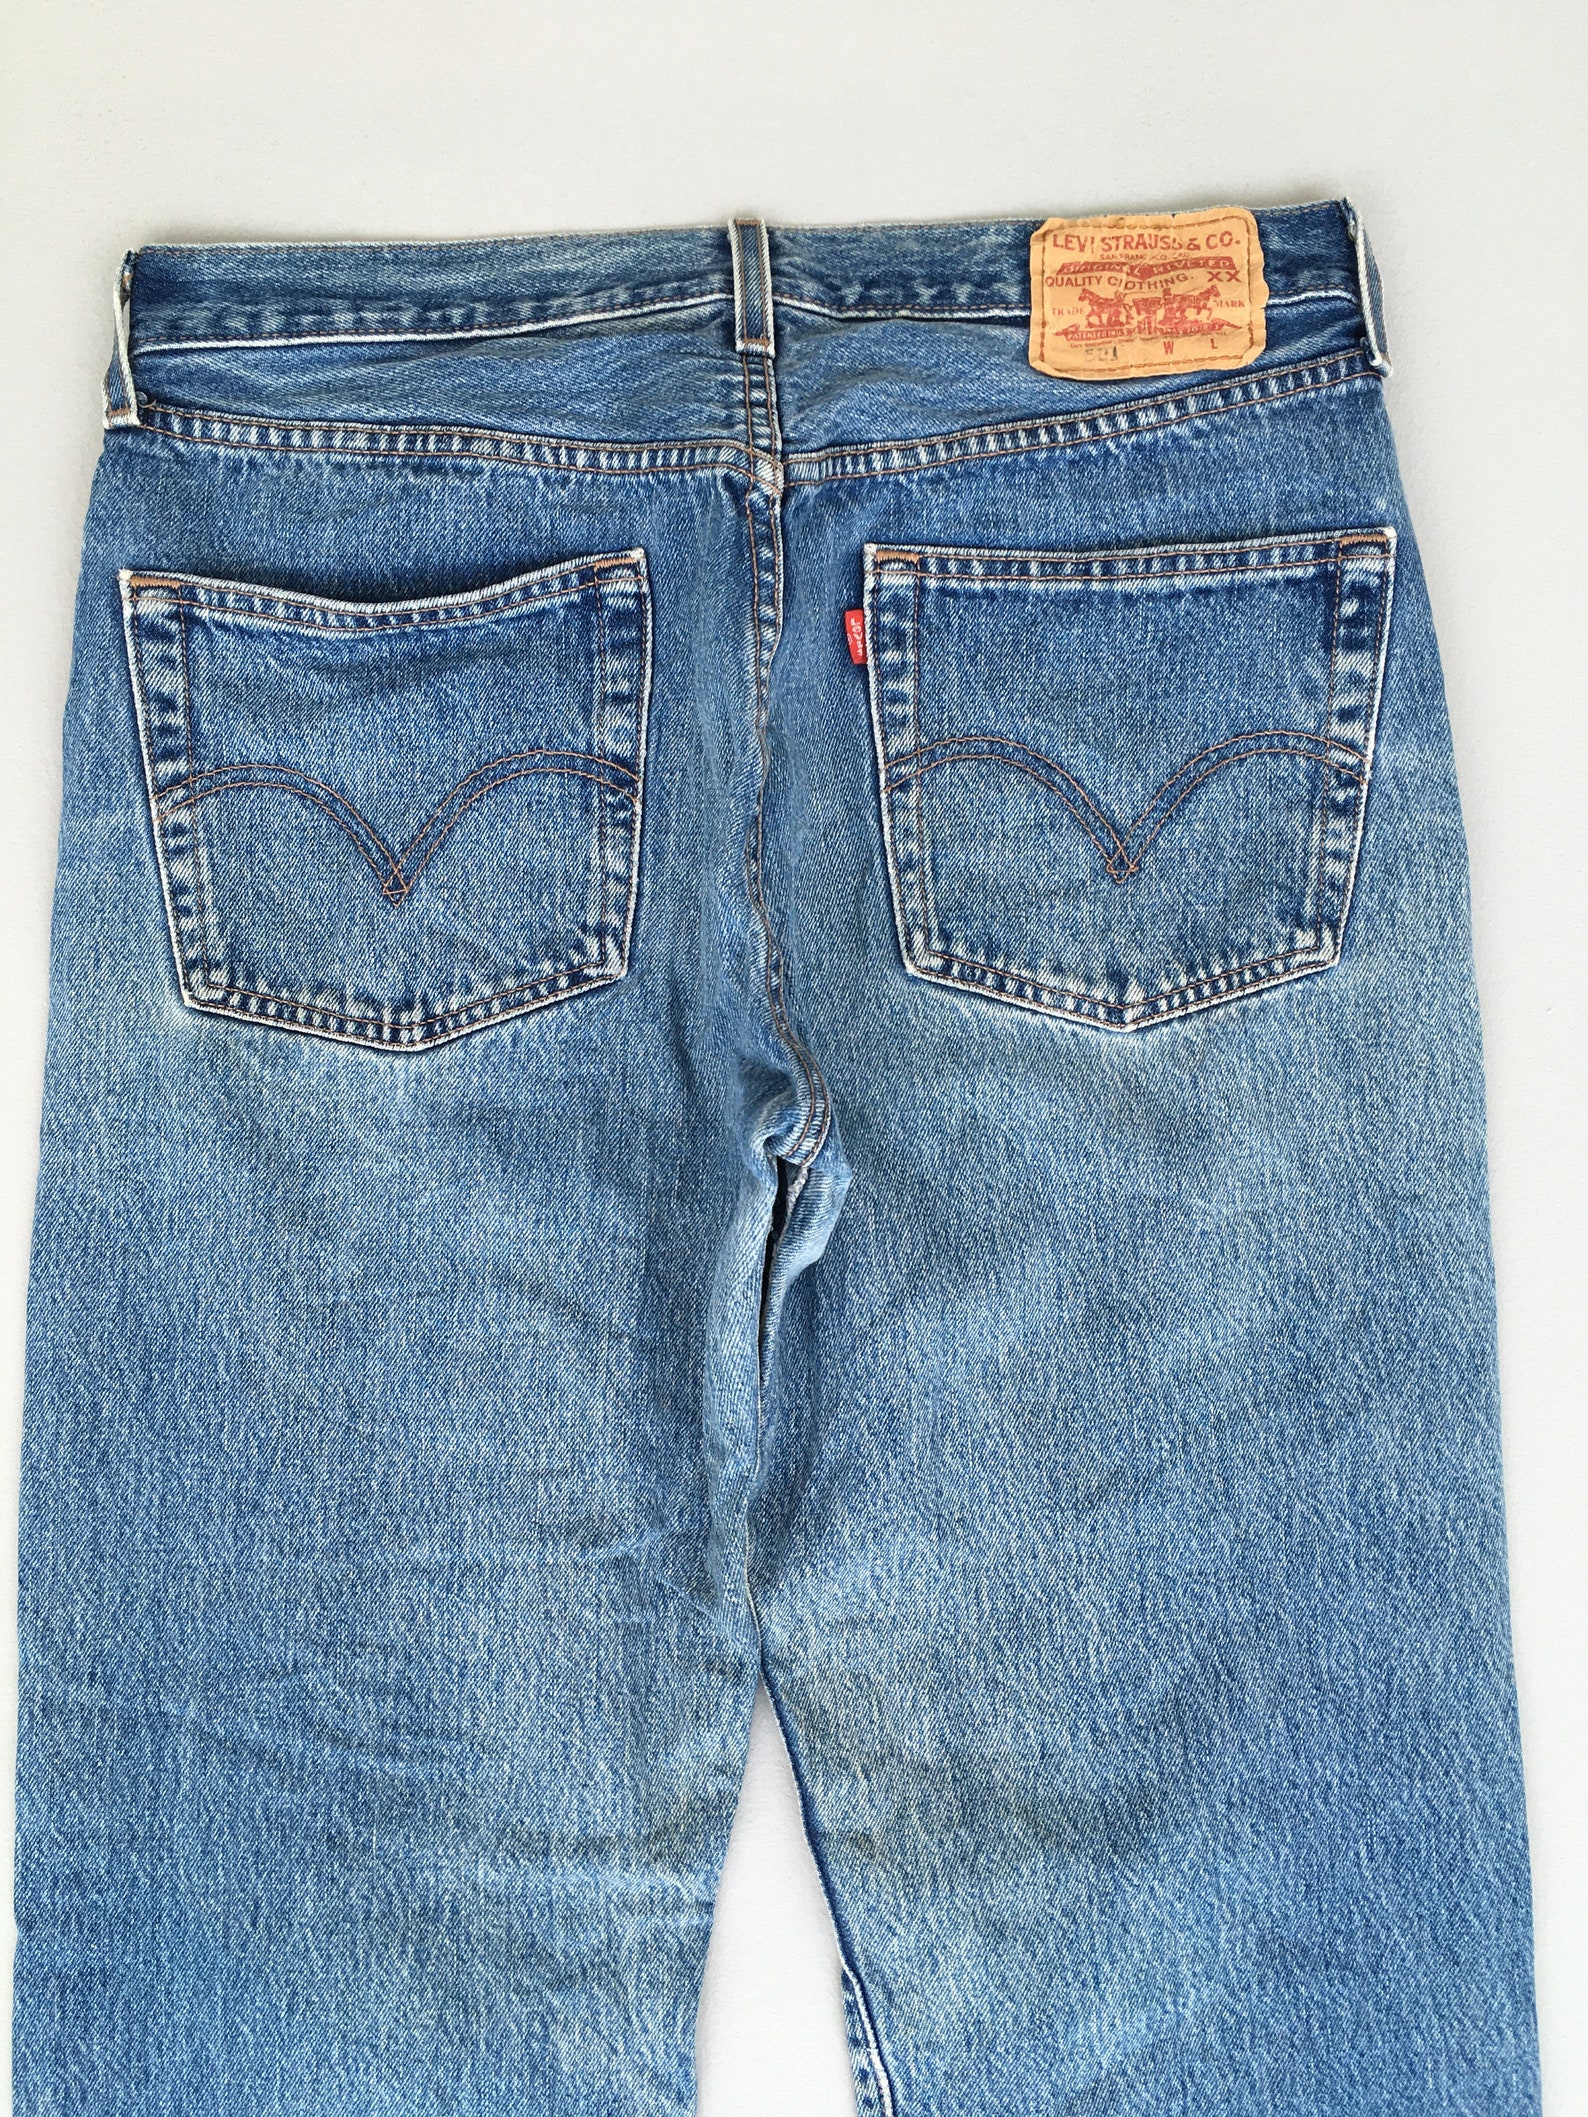 Size 30x32.5 Vintage Levis 501 Button Fly Jeans Levi's 90s - Etsy UK